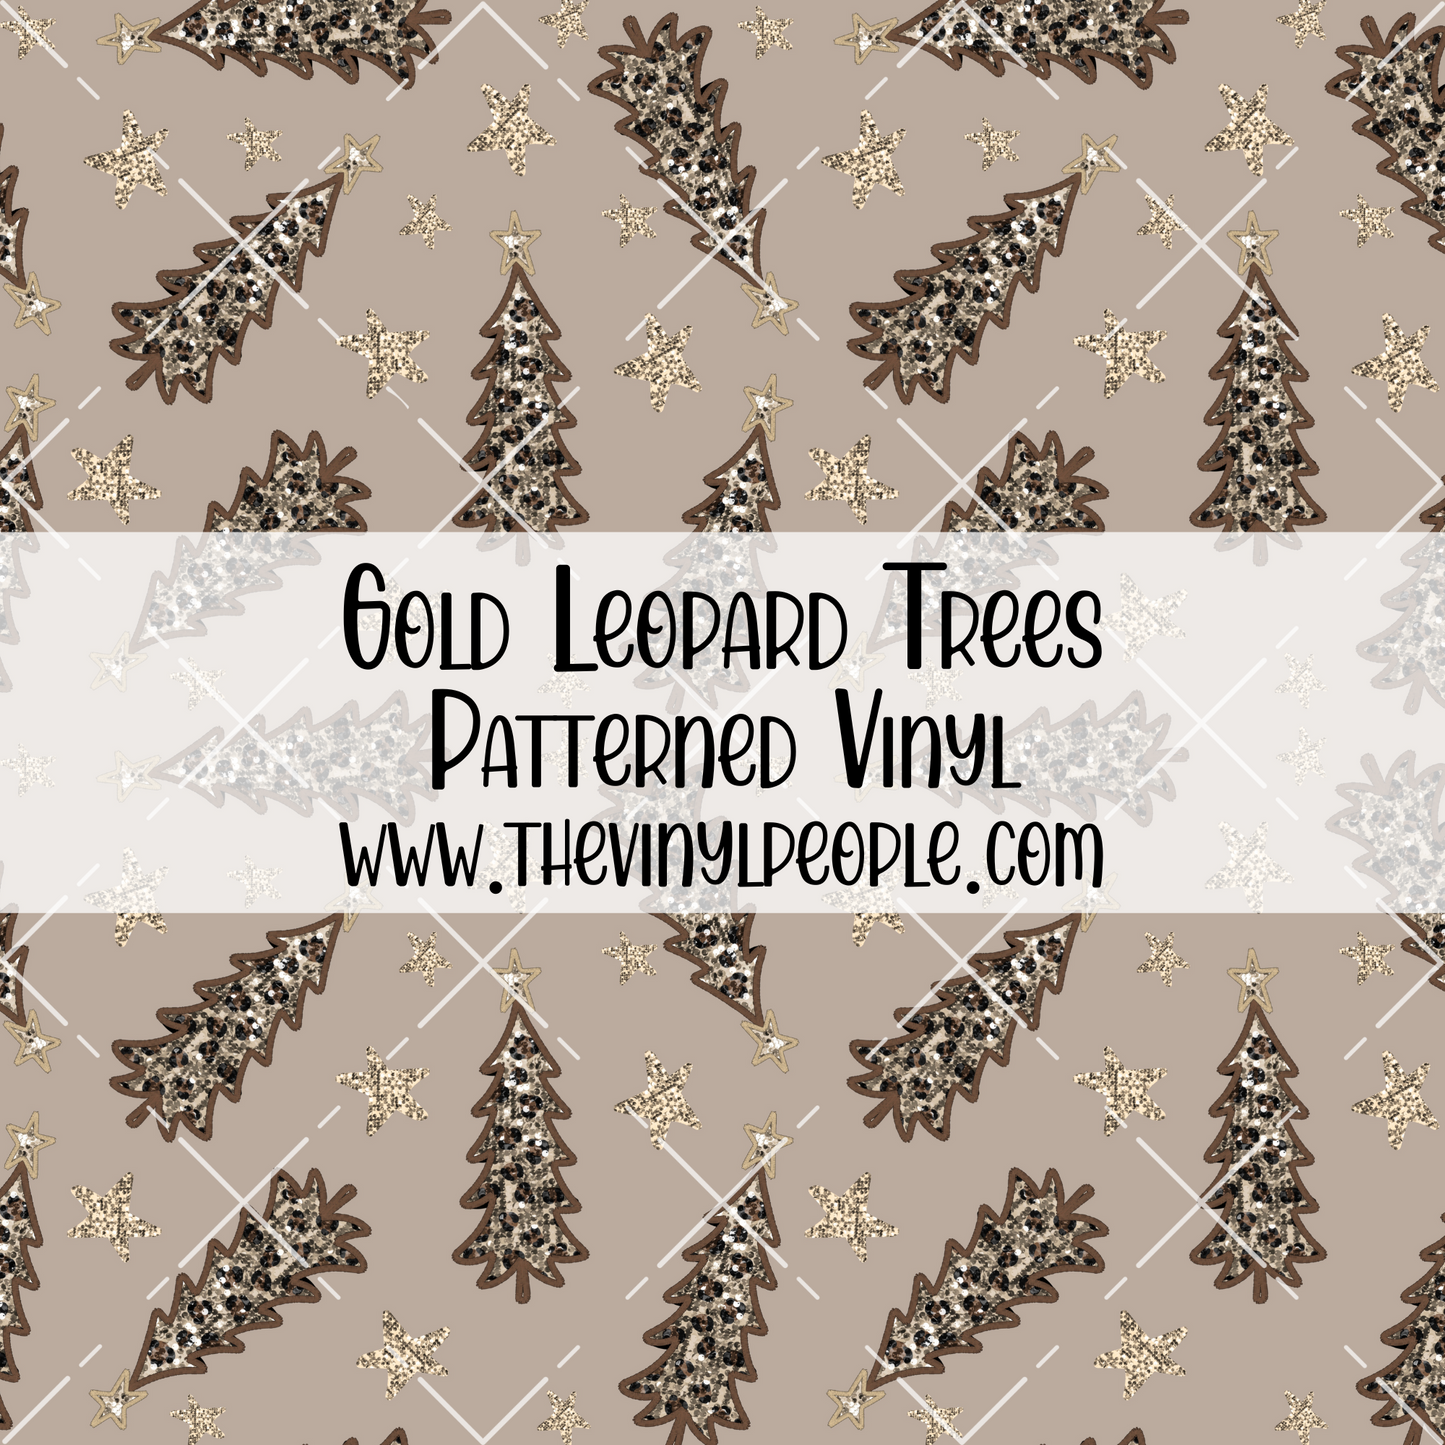 Gold Leopard Trees Patterned Vinyl